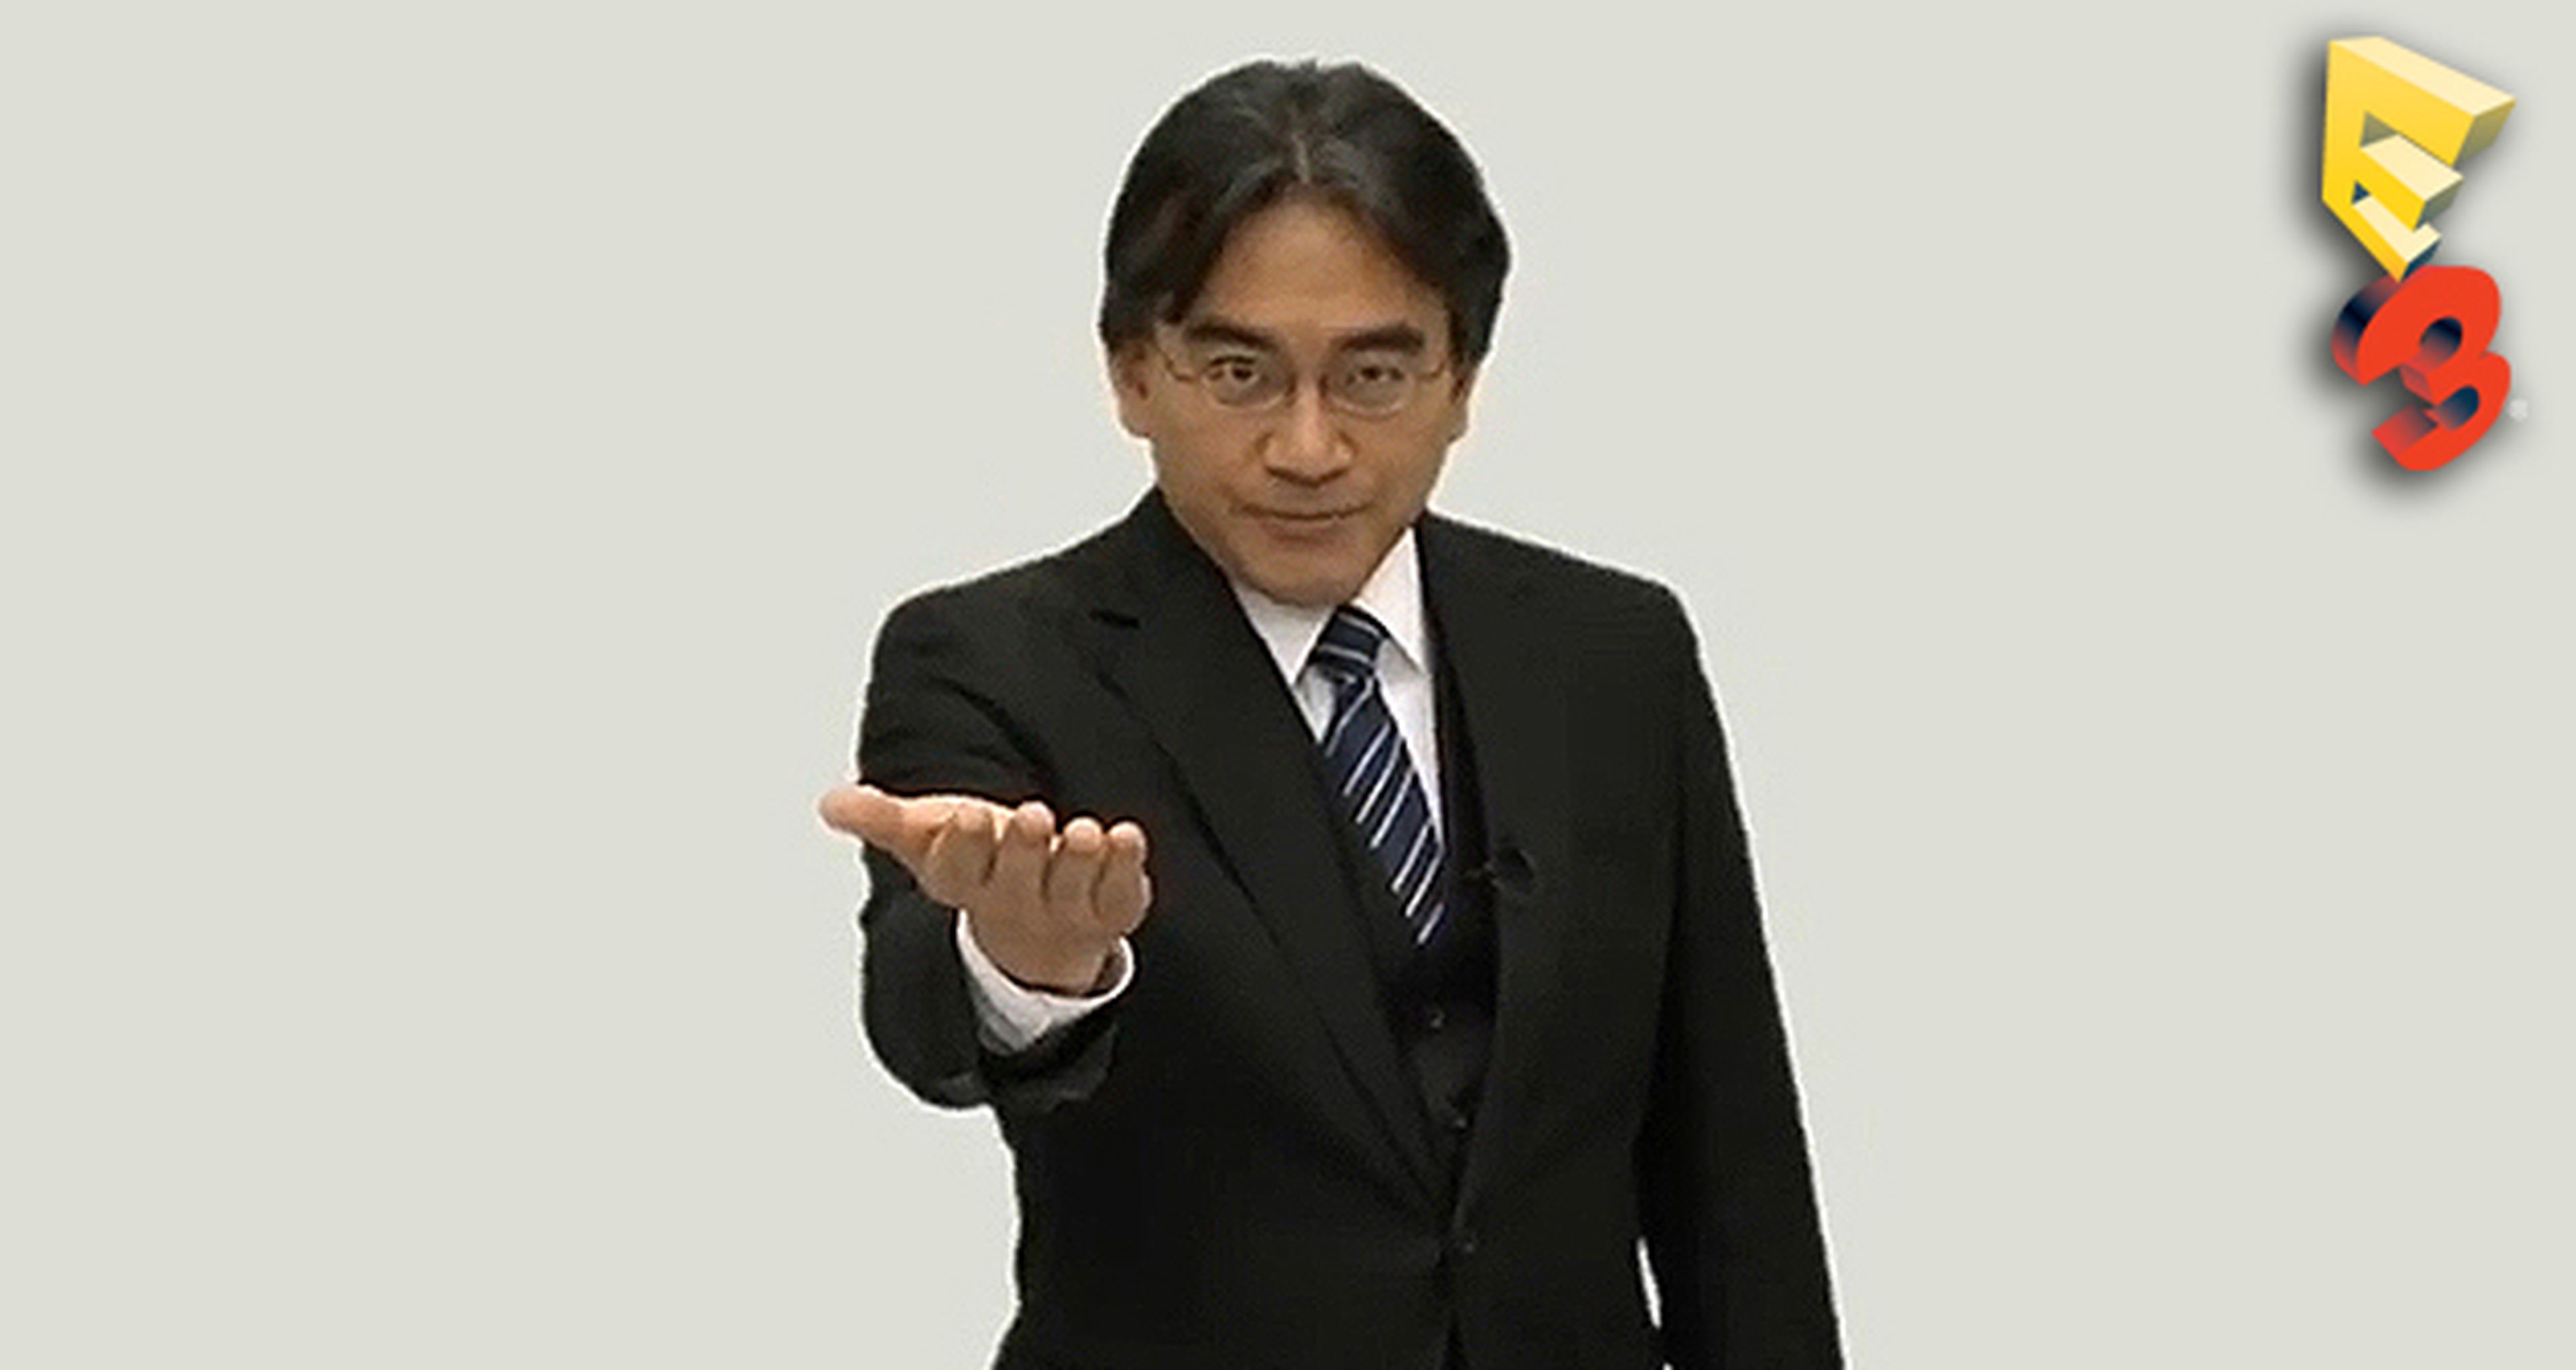 E3 2014: Iwata, presidente de Nintendo, no asistirá por motivos de salud